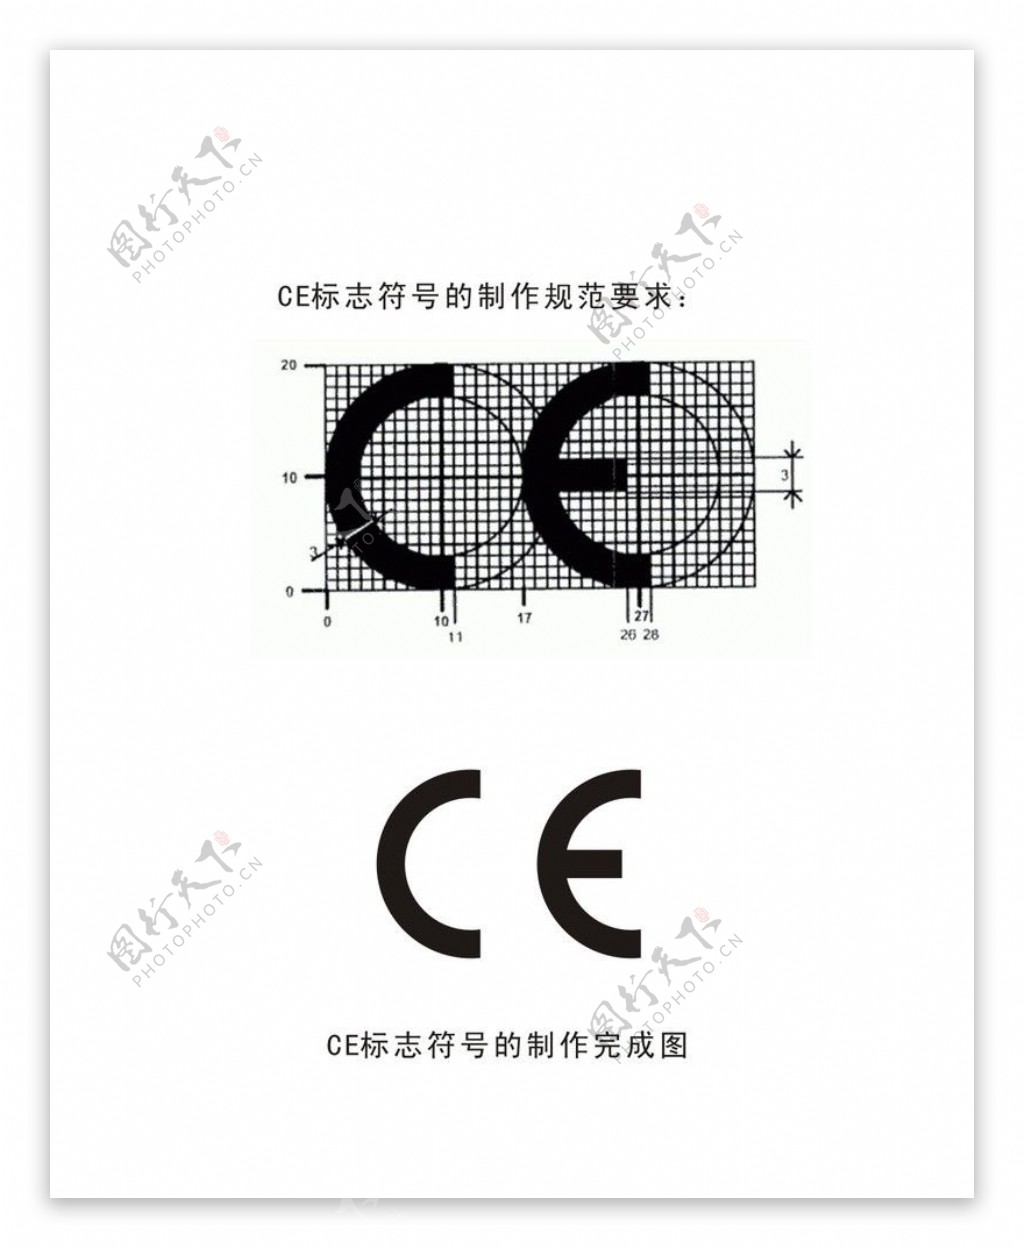 CE标志的制作规范图片